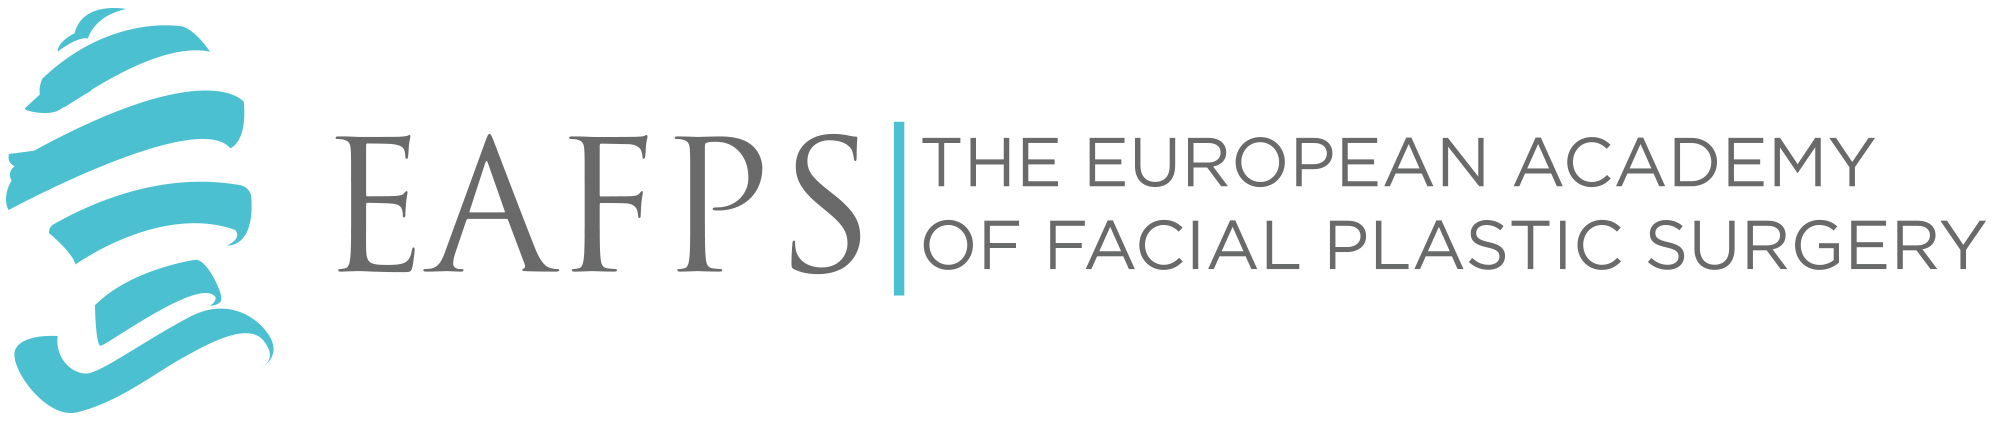 eafps-logo